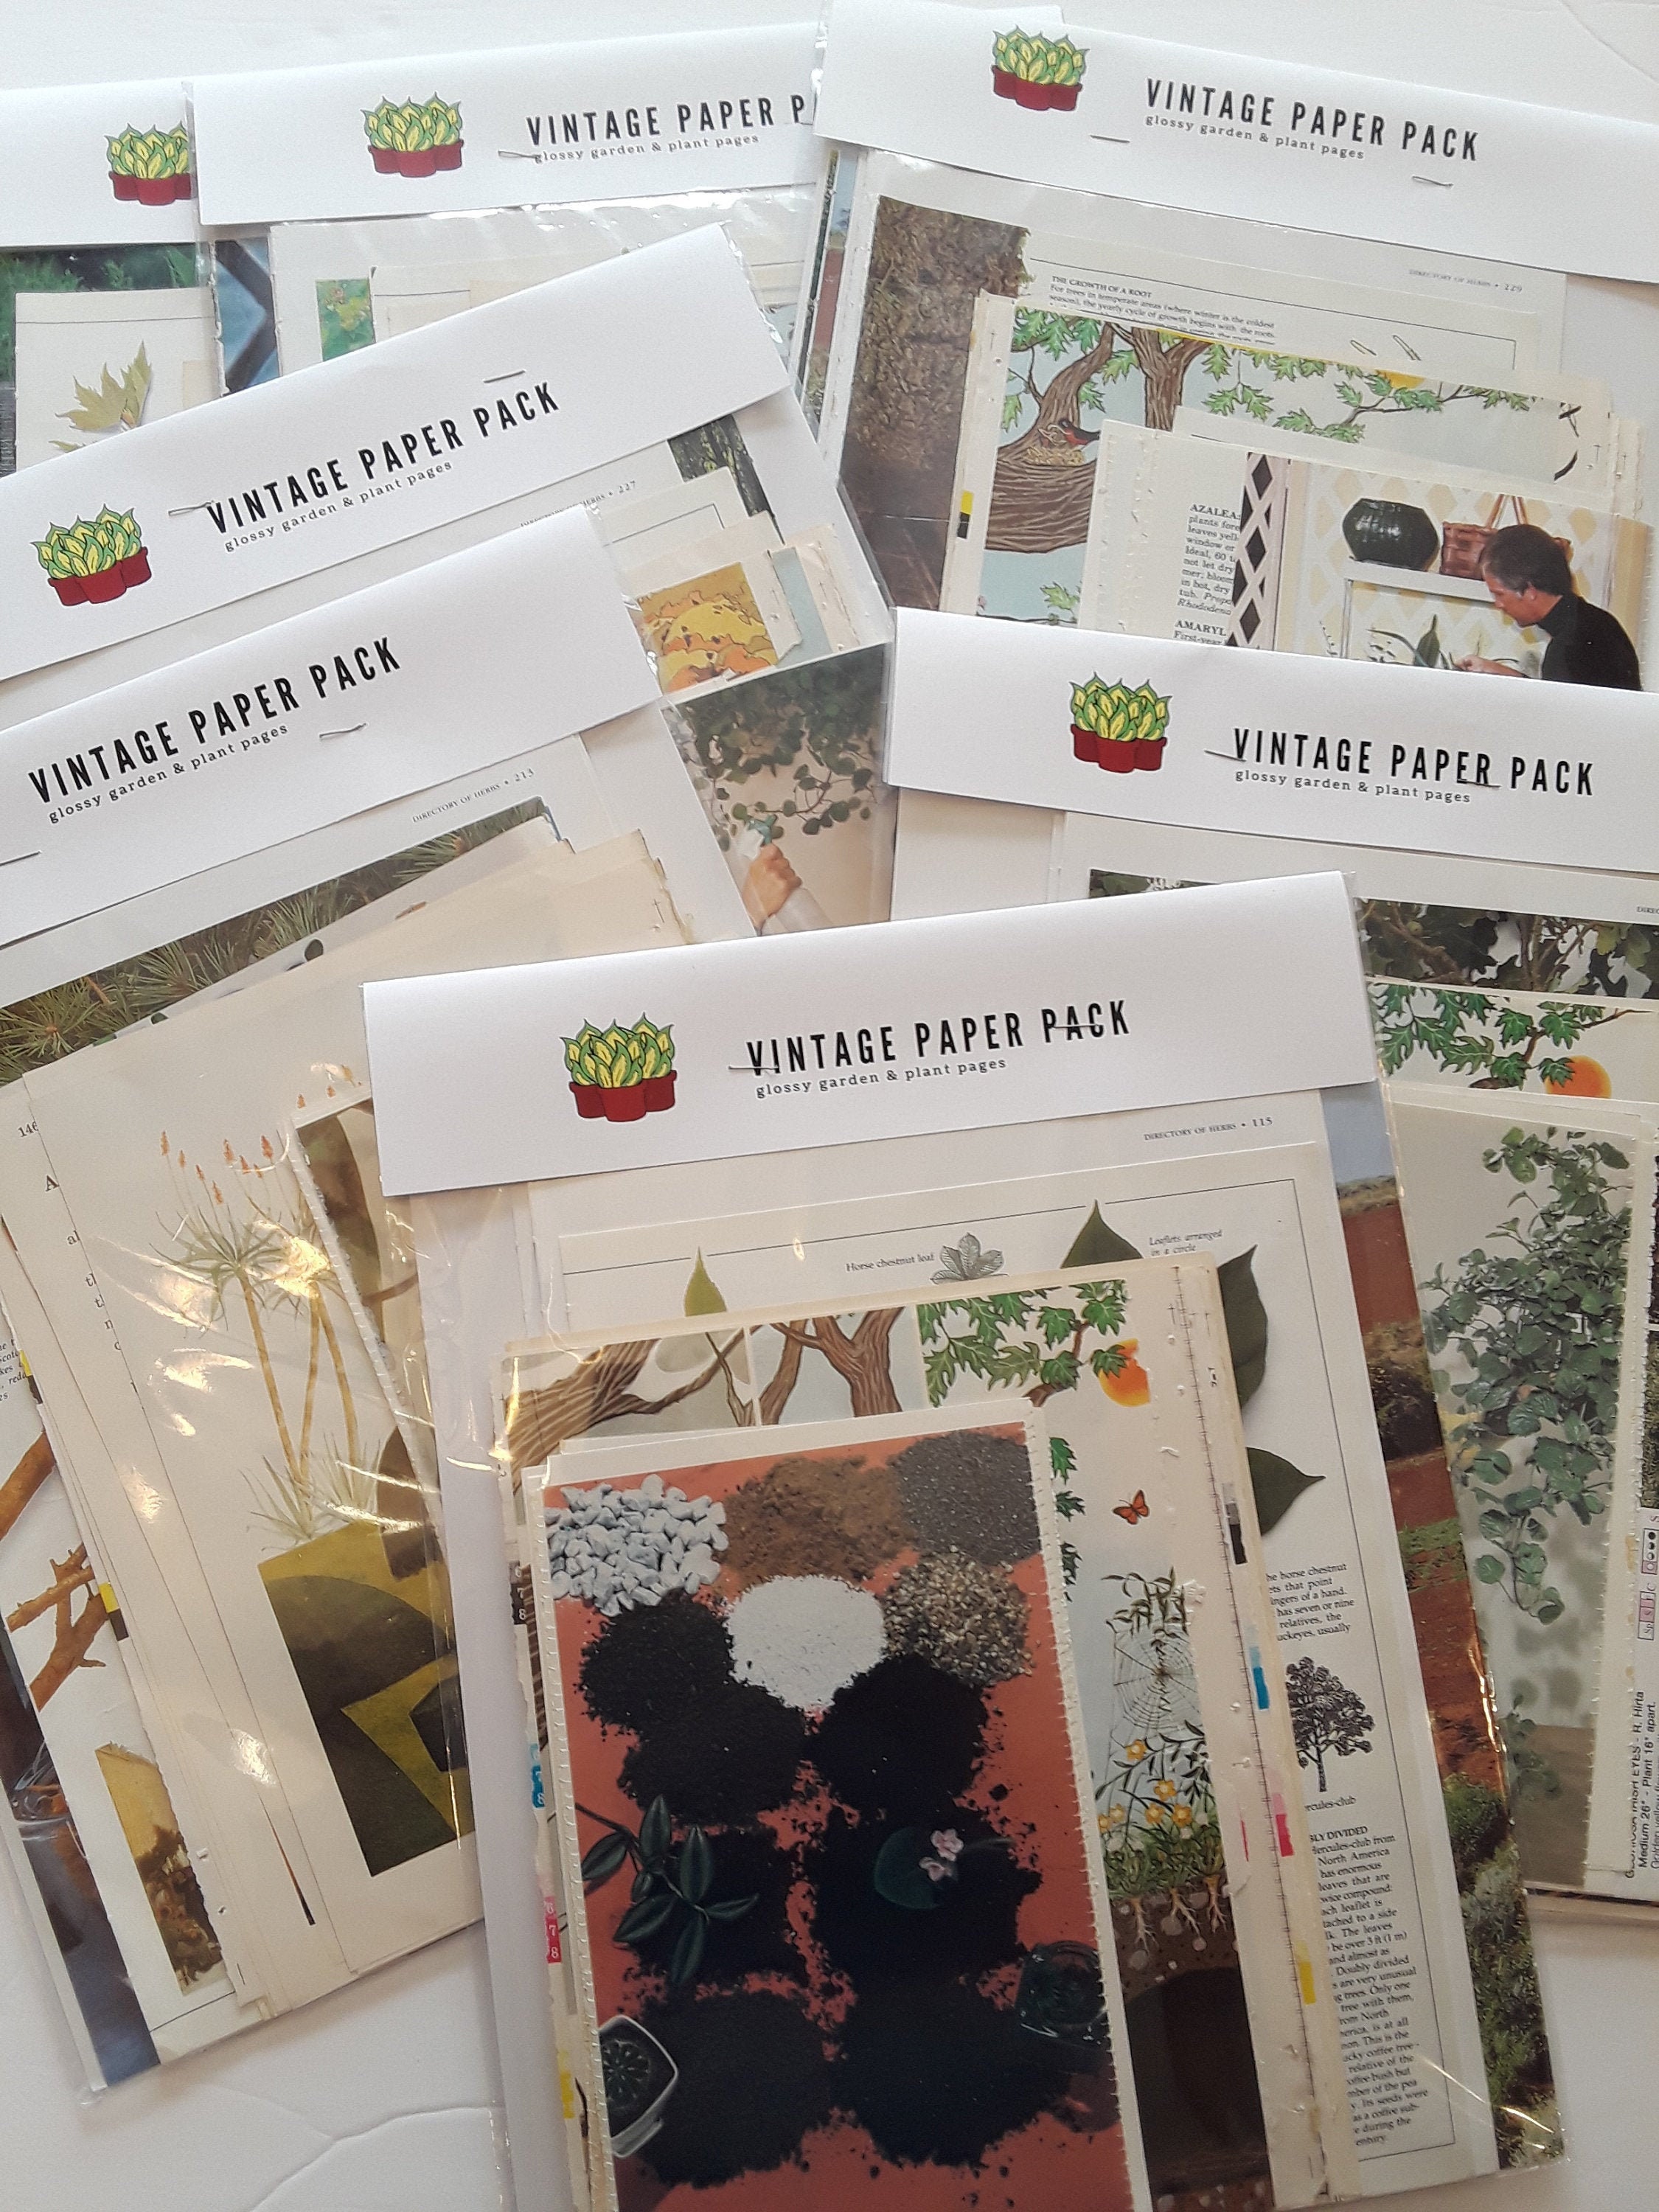 20 Tissue Paper Assortment (ten Colors), 150 Pcs  Gift tissue paper,  Christmas design, Paper quilling designs